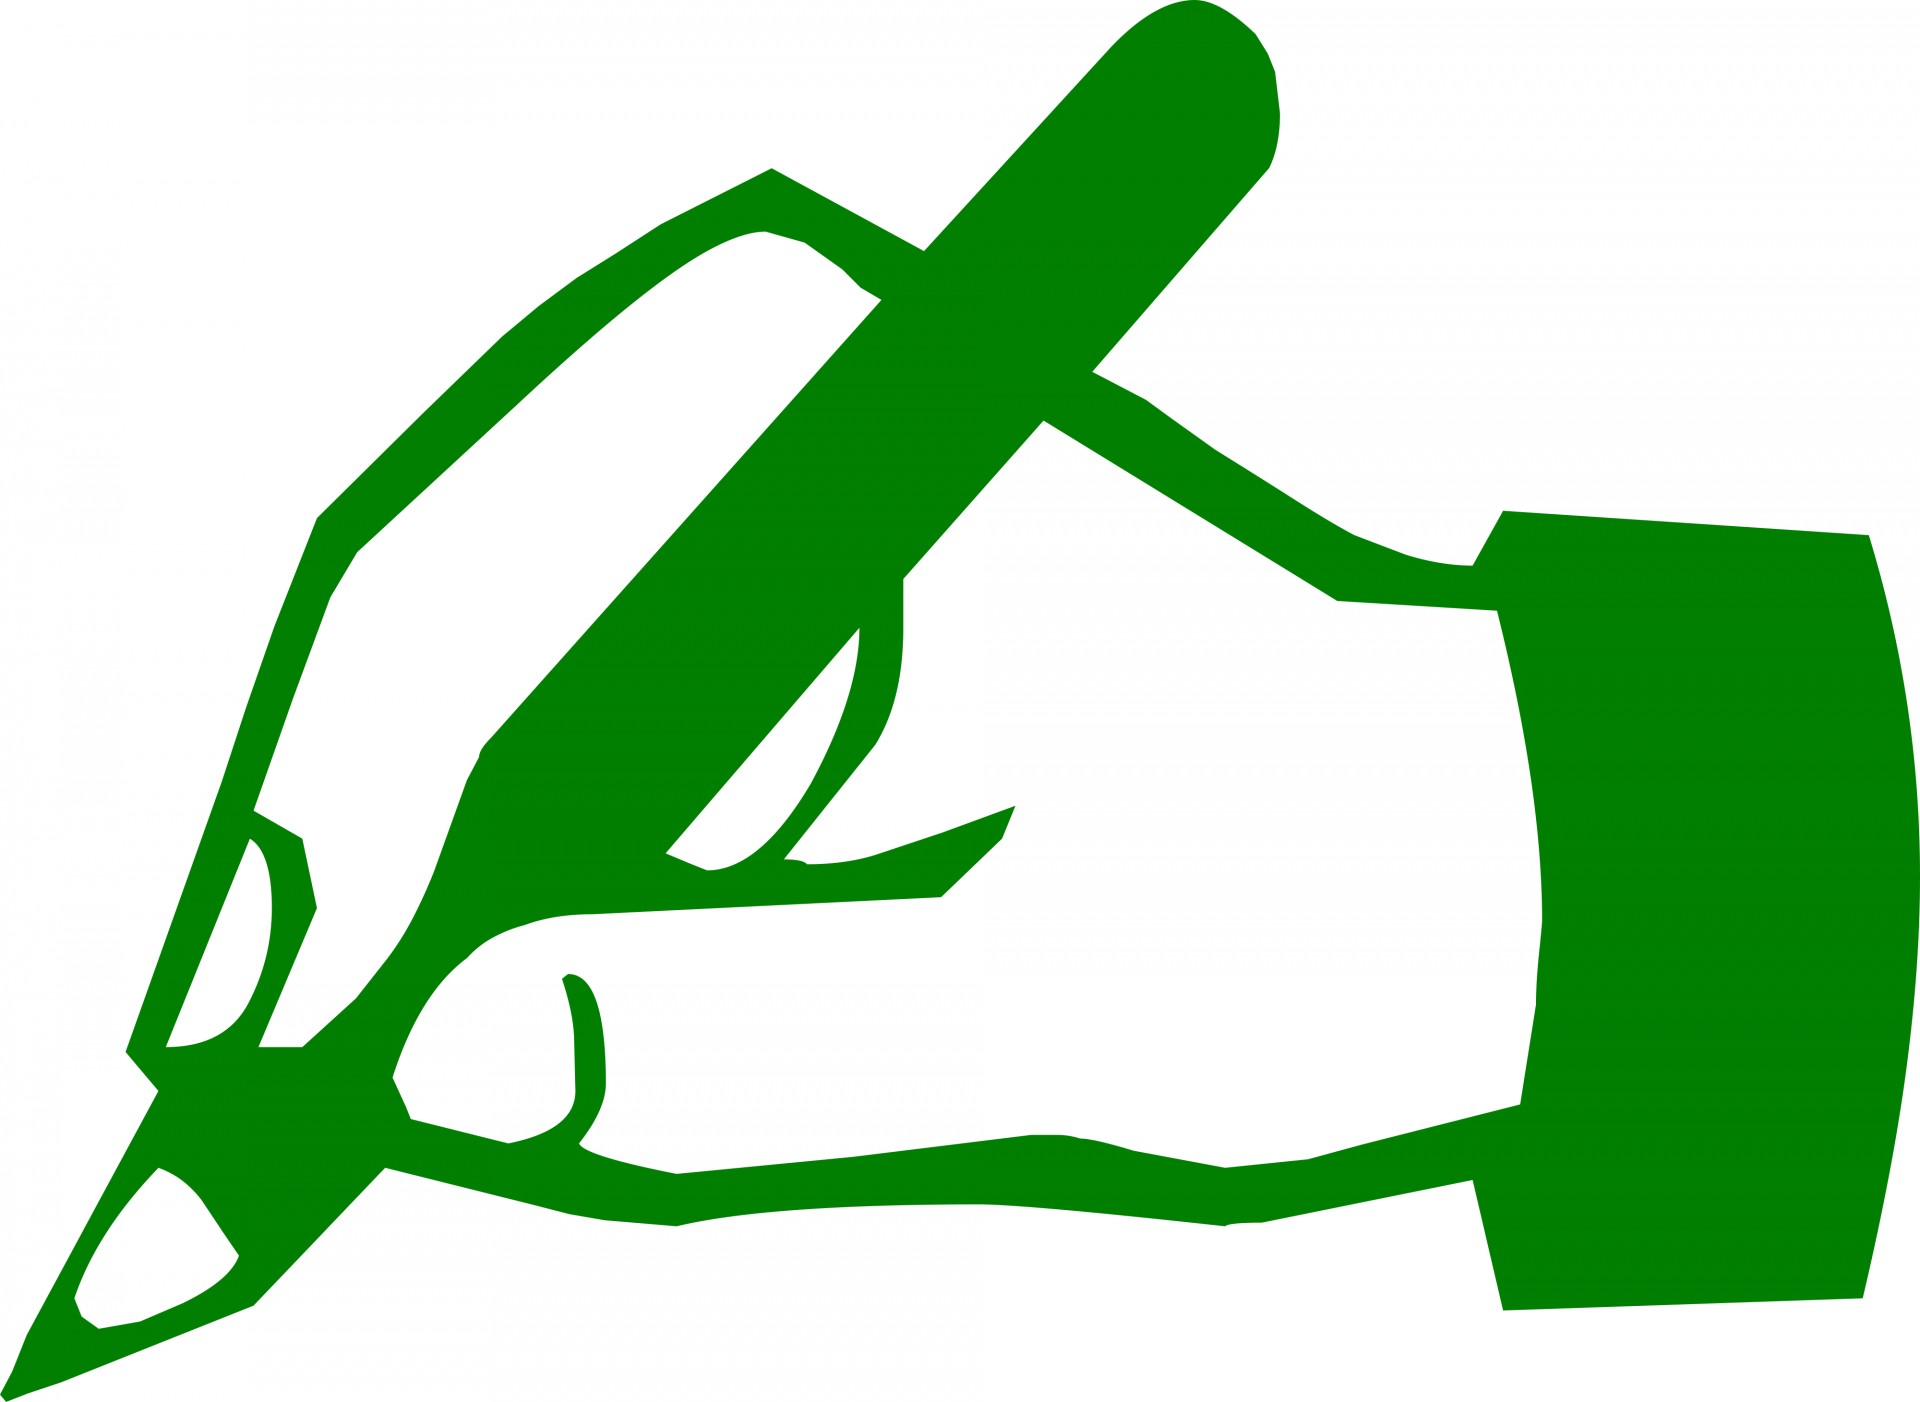 green pen symbol free photo